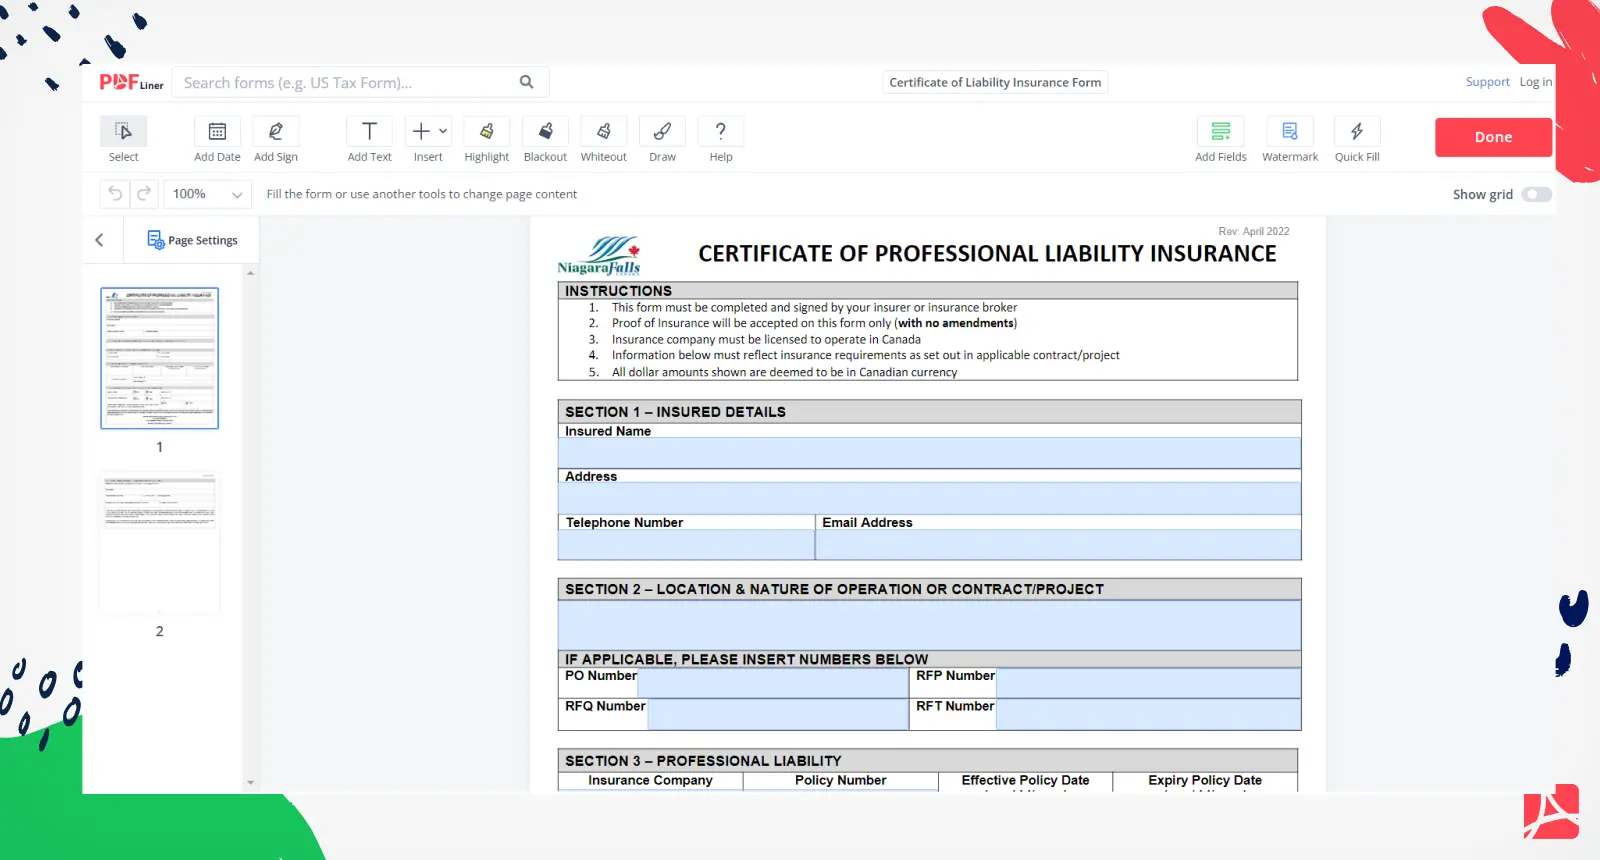 Certificate of Liability Insurance Form Screenshot